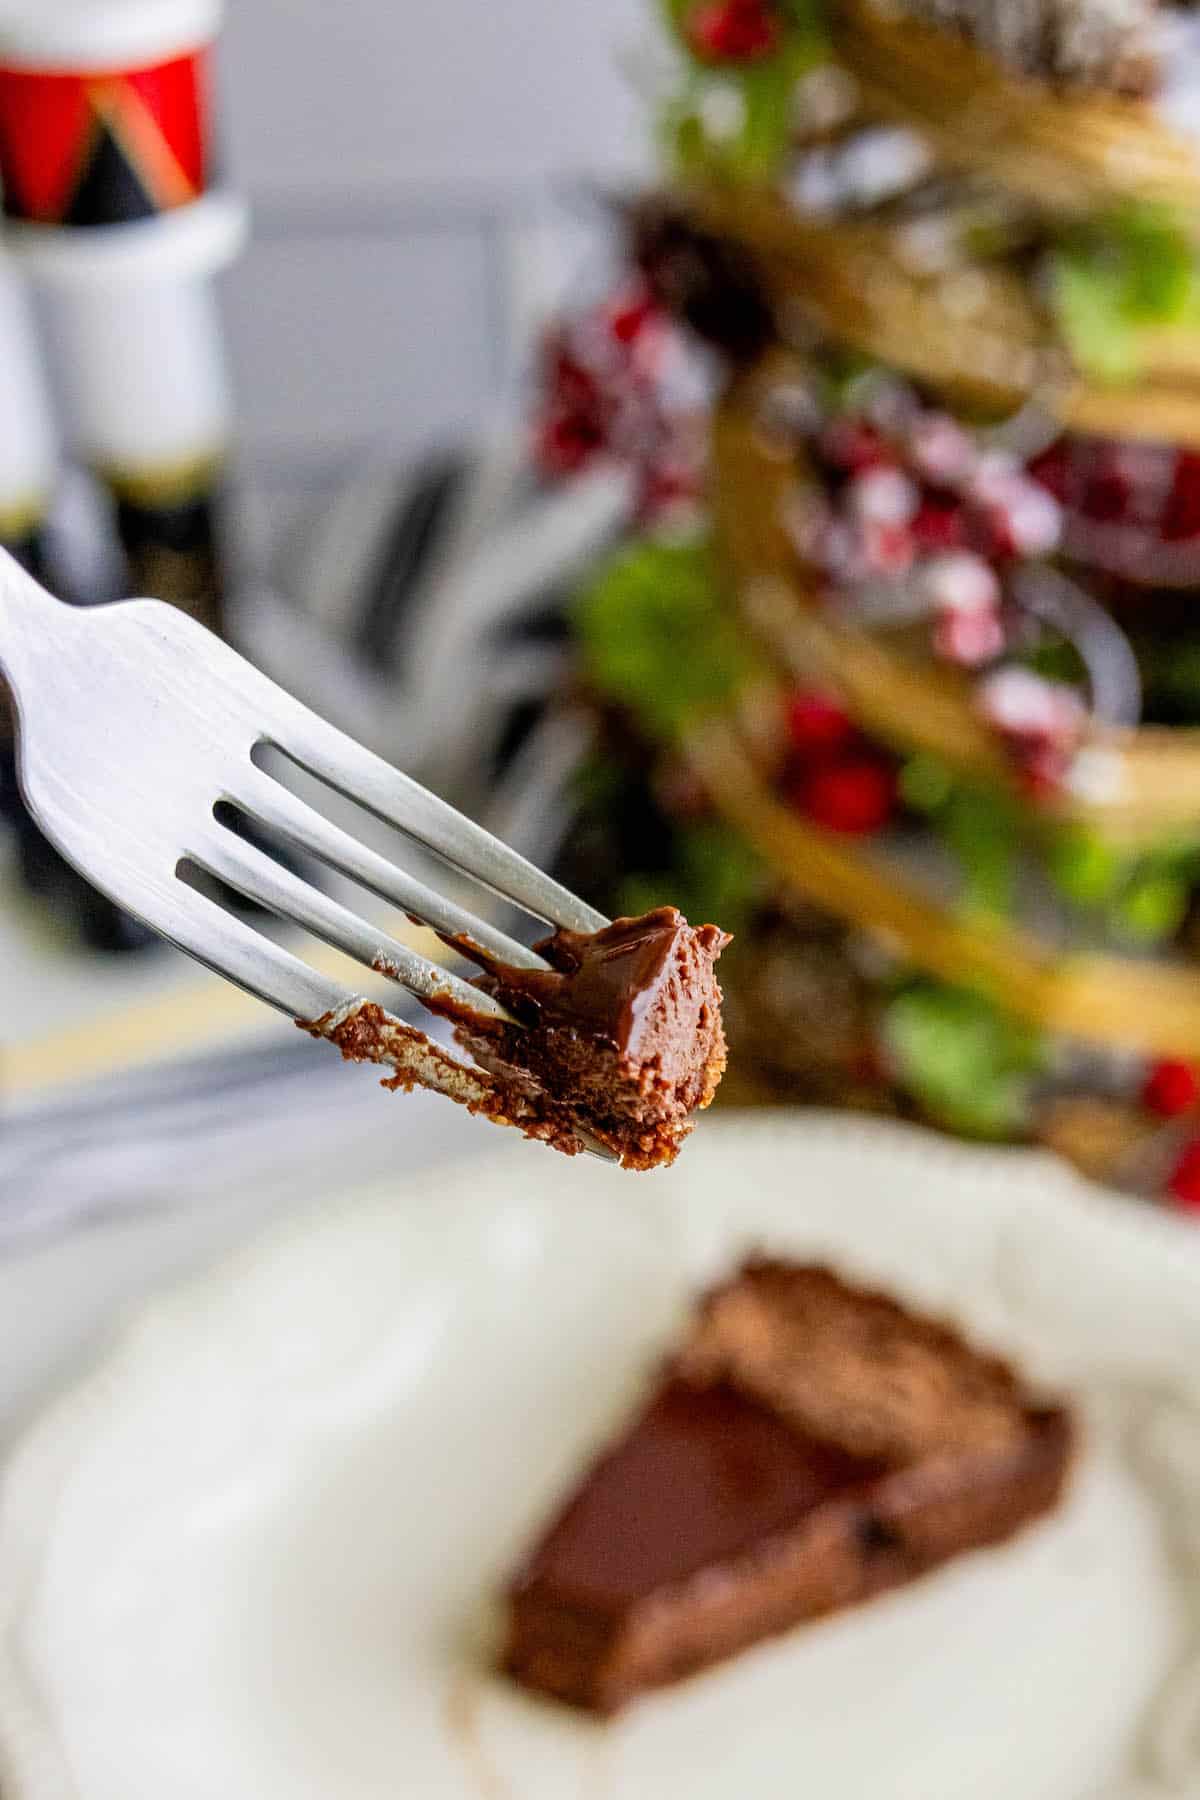 Keywords: chocolate tart, plate